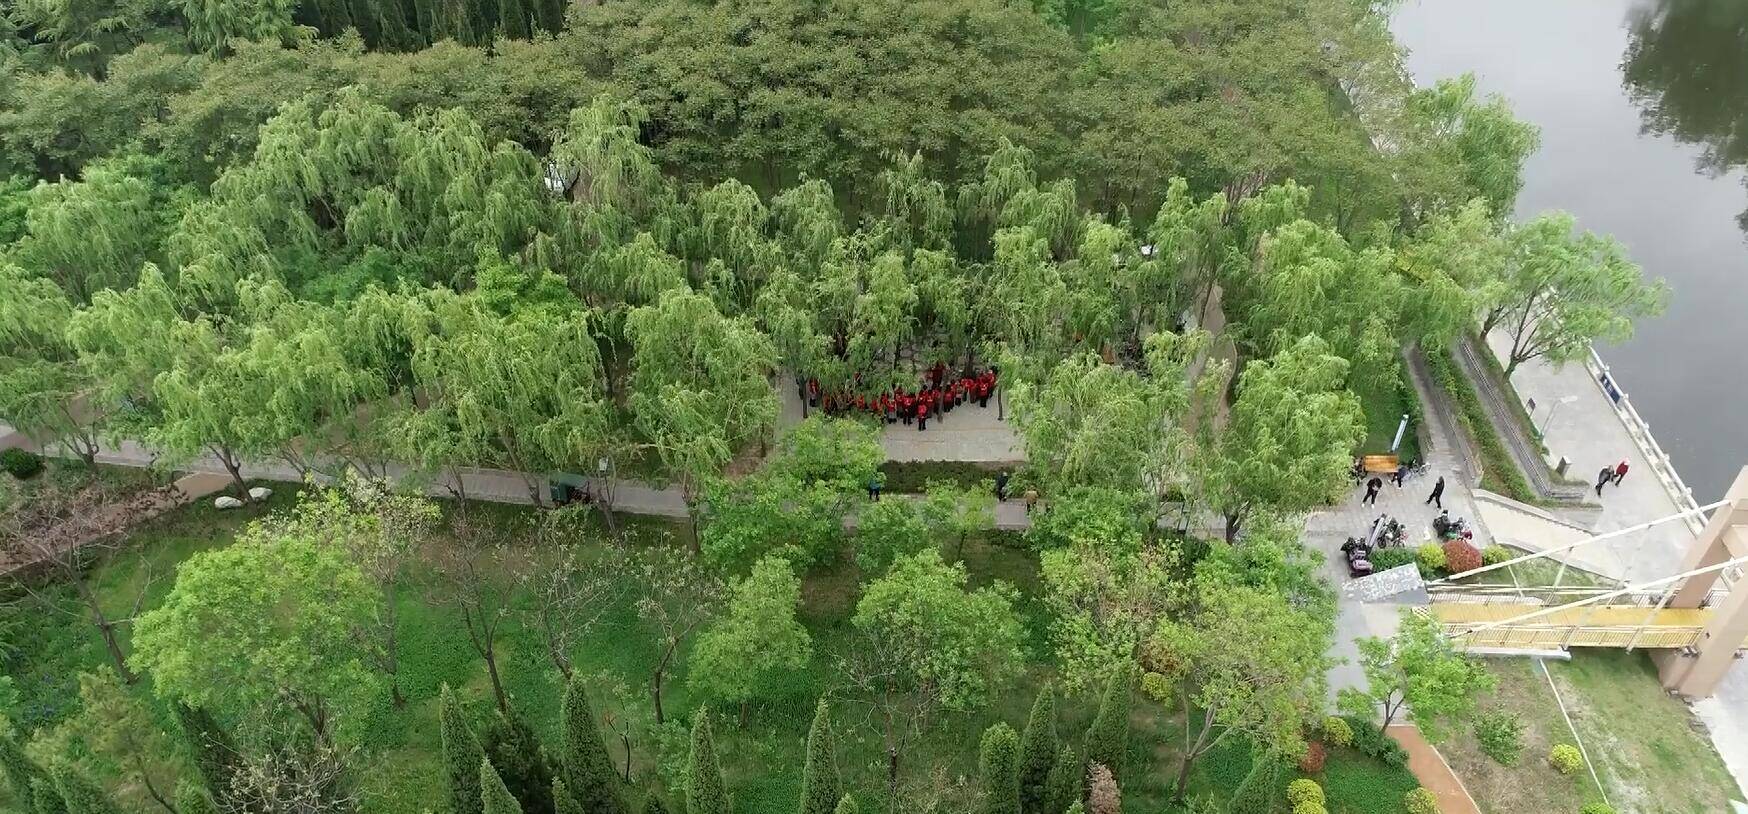 Vlog丨滨州：景色秀丽的新立河畔 丛林中传出“红色旋律”